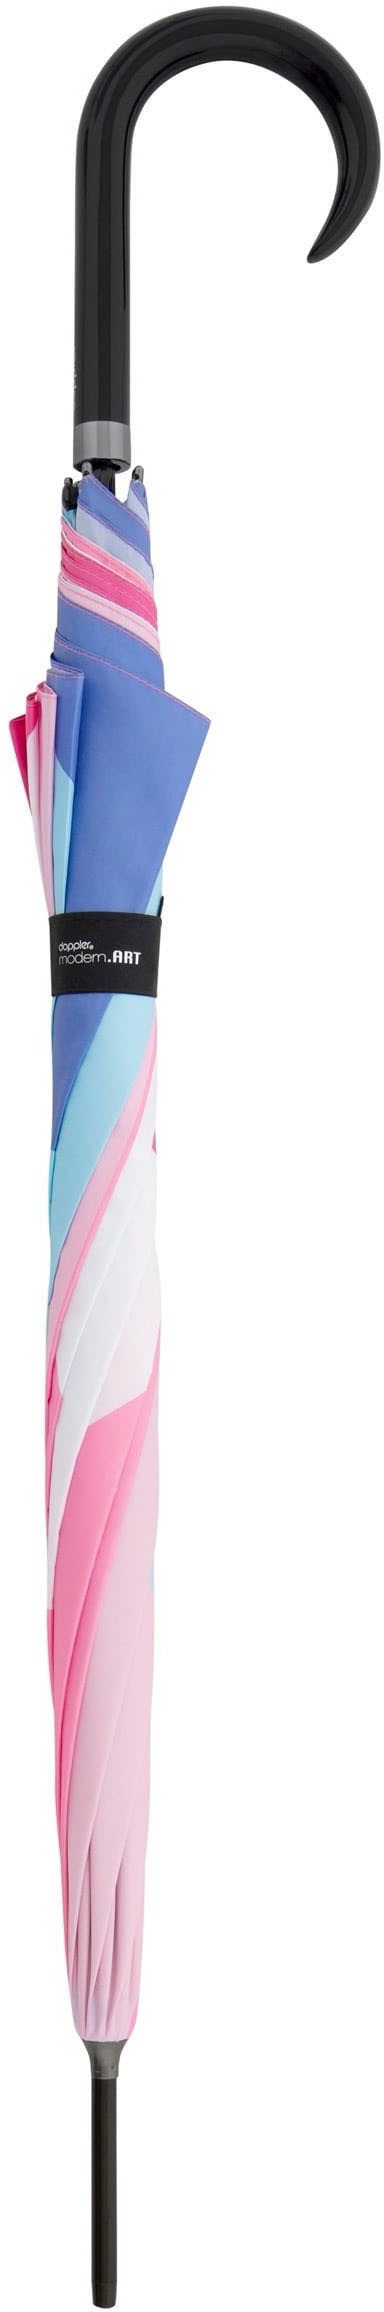 pastel« cool Stockregenschirm doppler® Lang AC BAUR | online »modern.ART bestellen